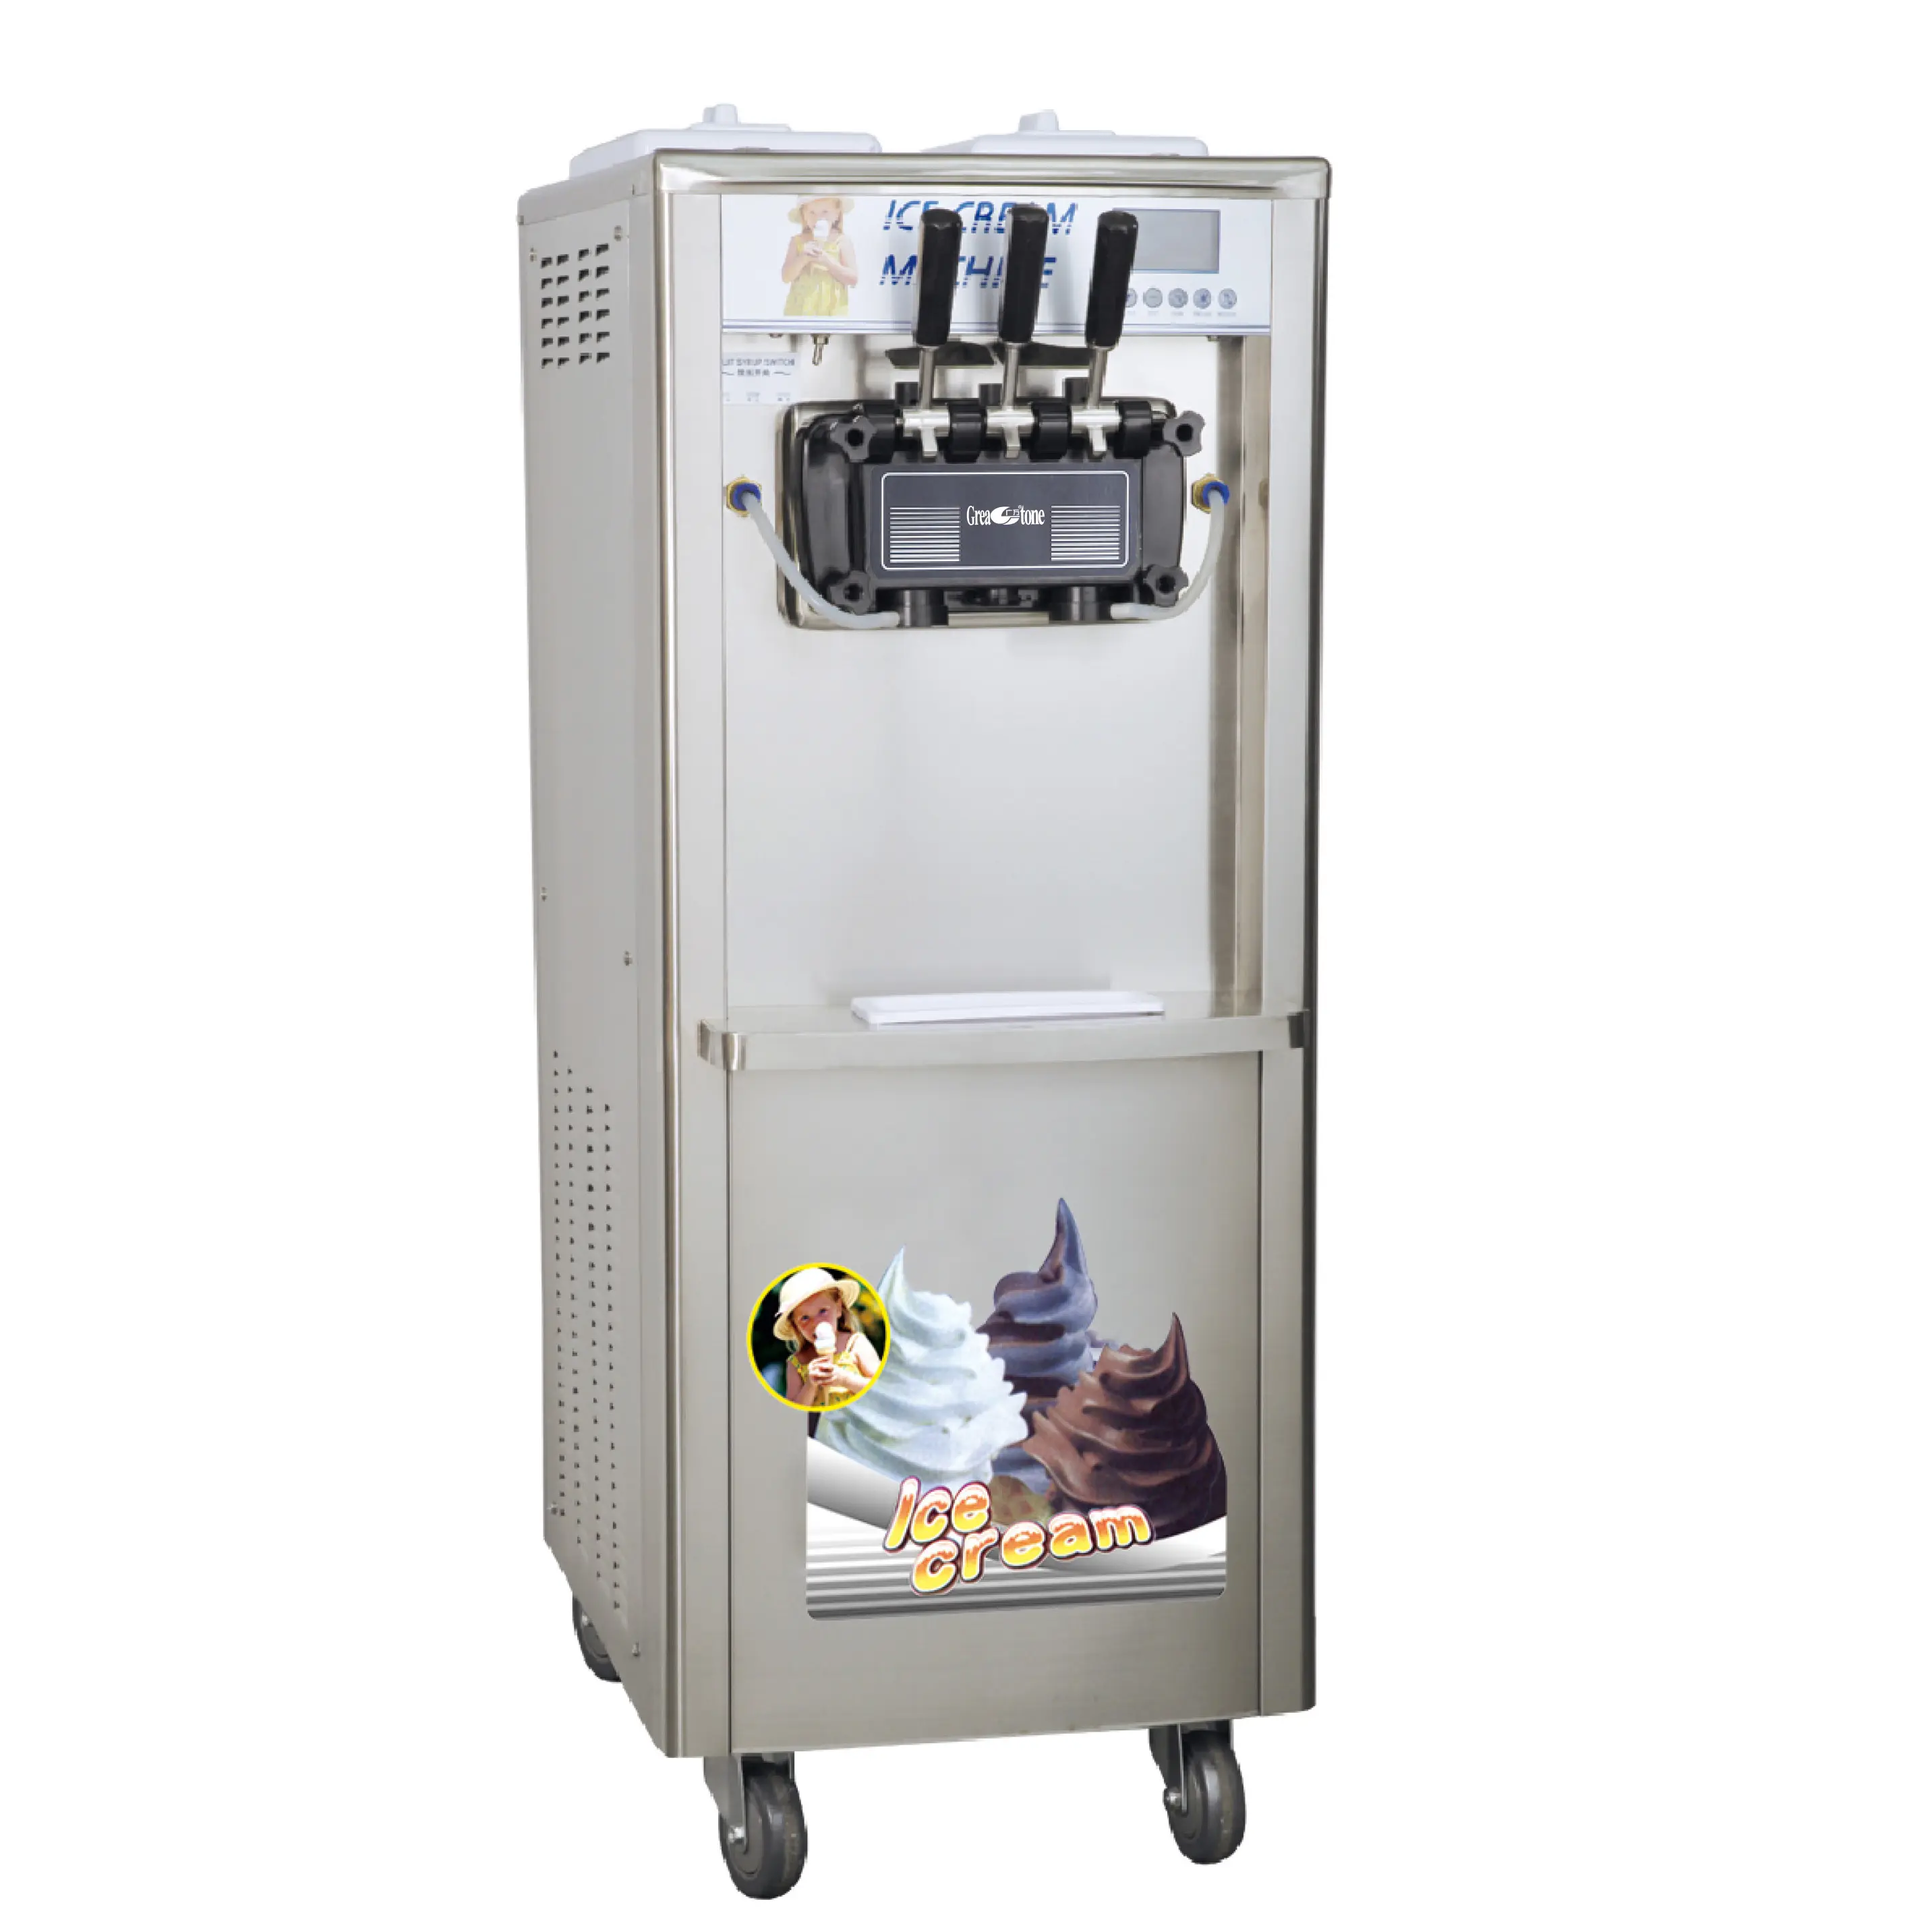 China manufacturer price yoghurt rainbow taylor soft ice cream machines prices good BQL-F7346N